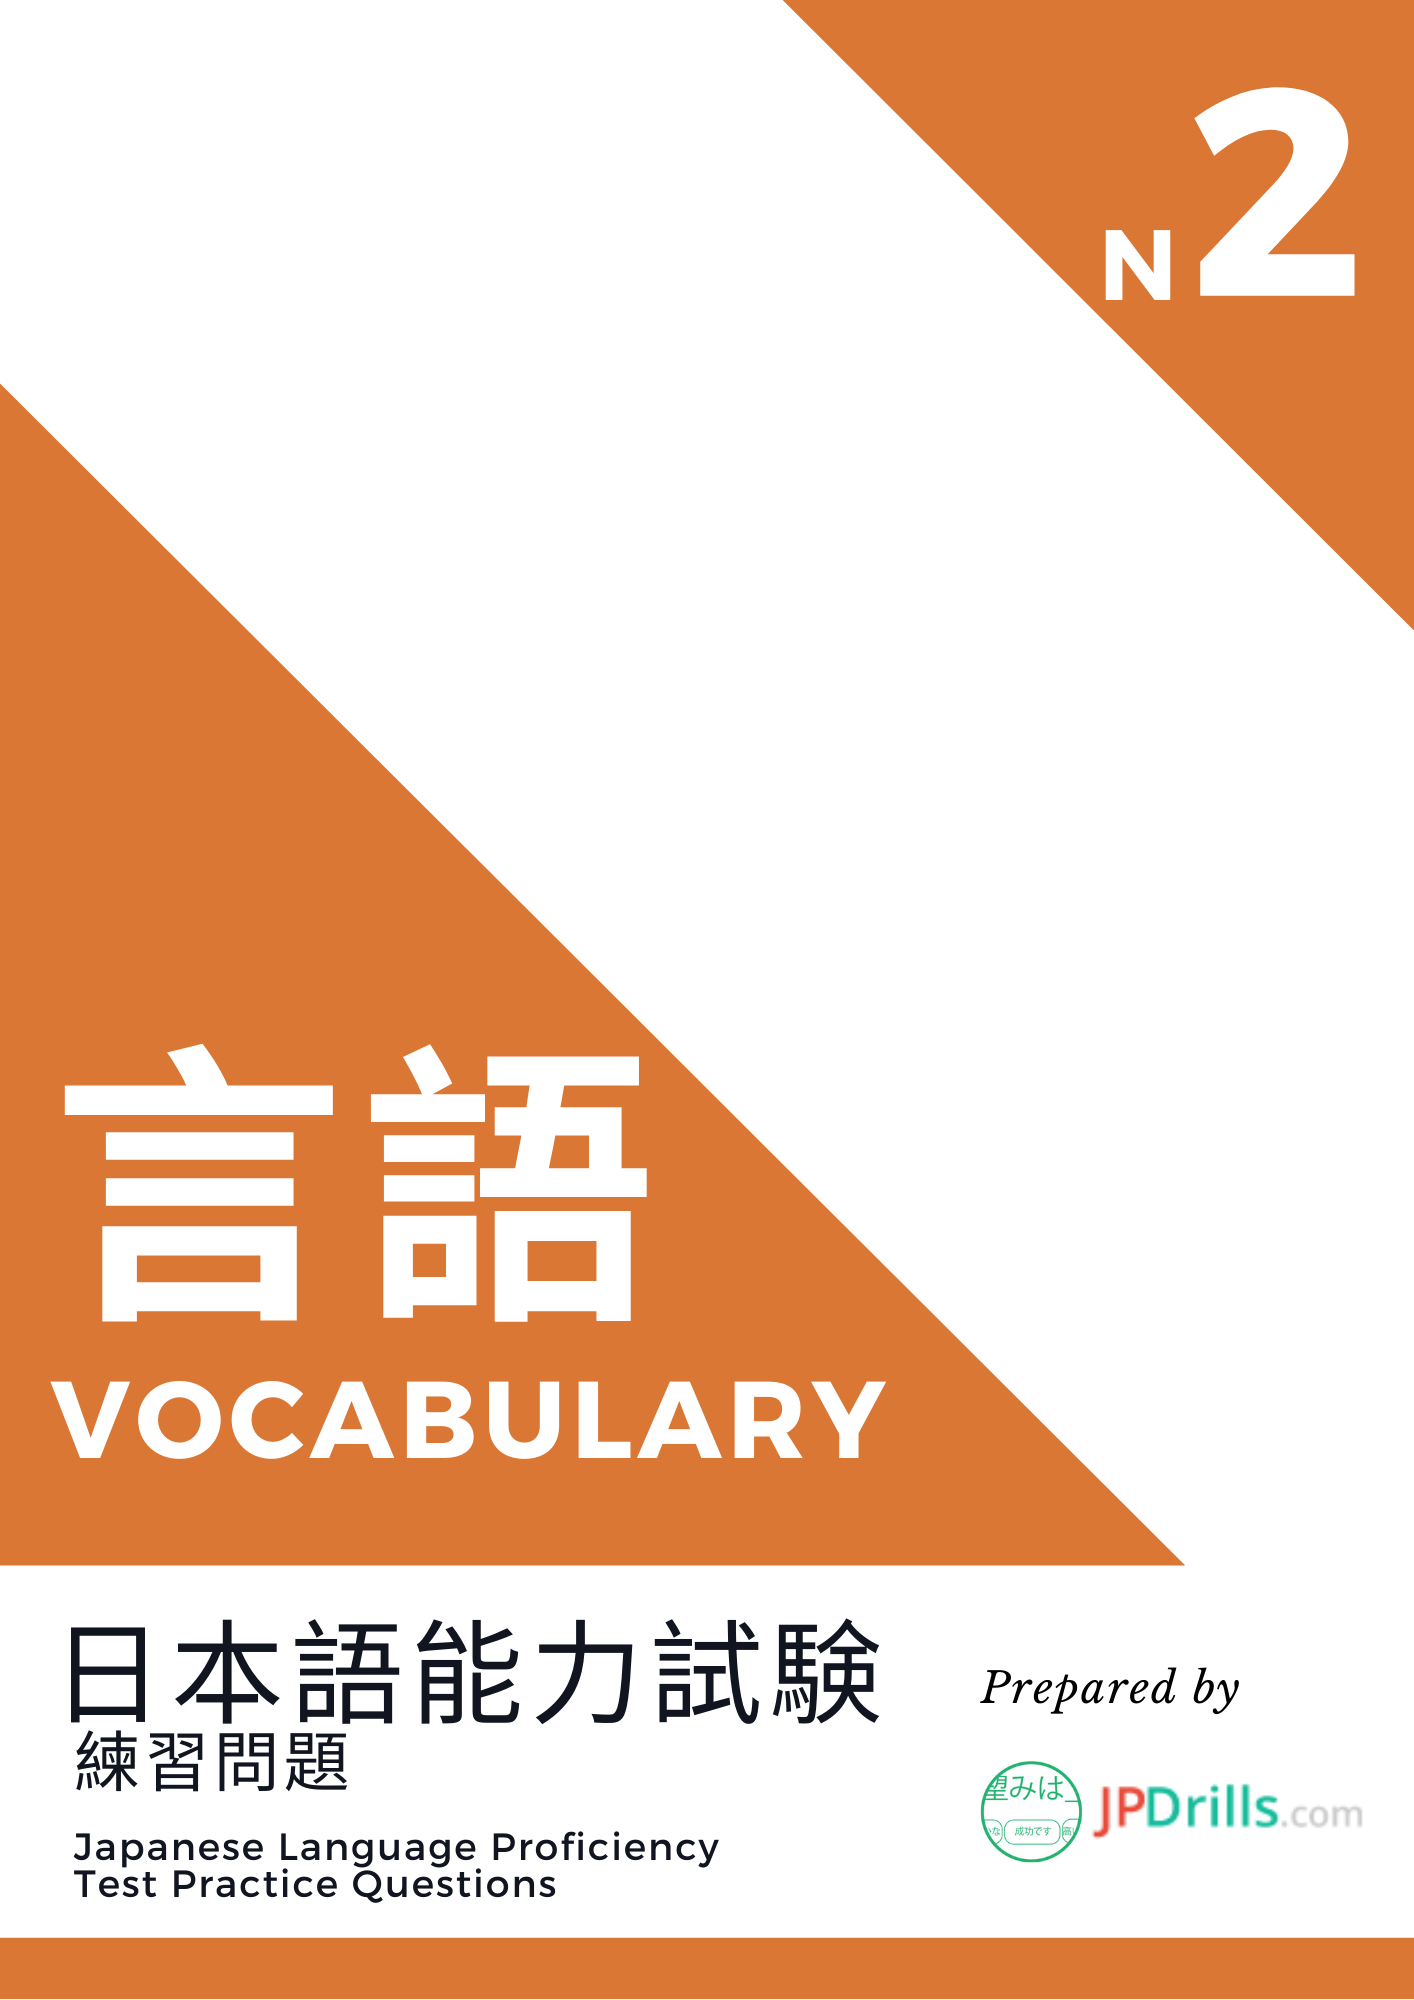 JLPT N2 Vocabulary quiz logo